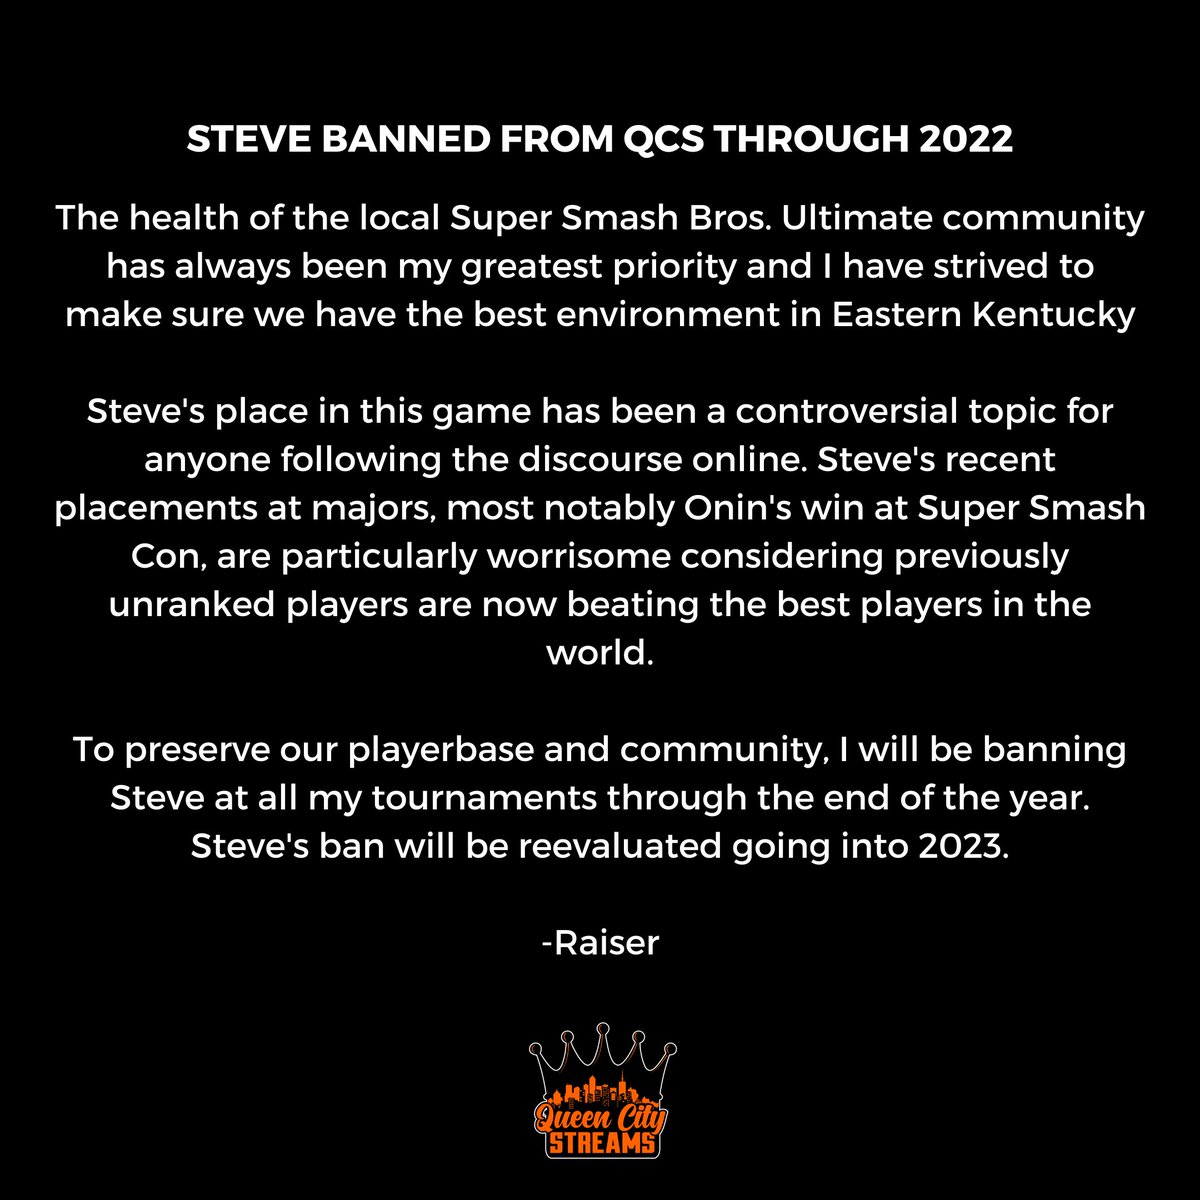 RT @MisterLyttle: Steve banned from QCS events through 2022 https://t.co/qDXtFc4rAa